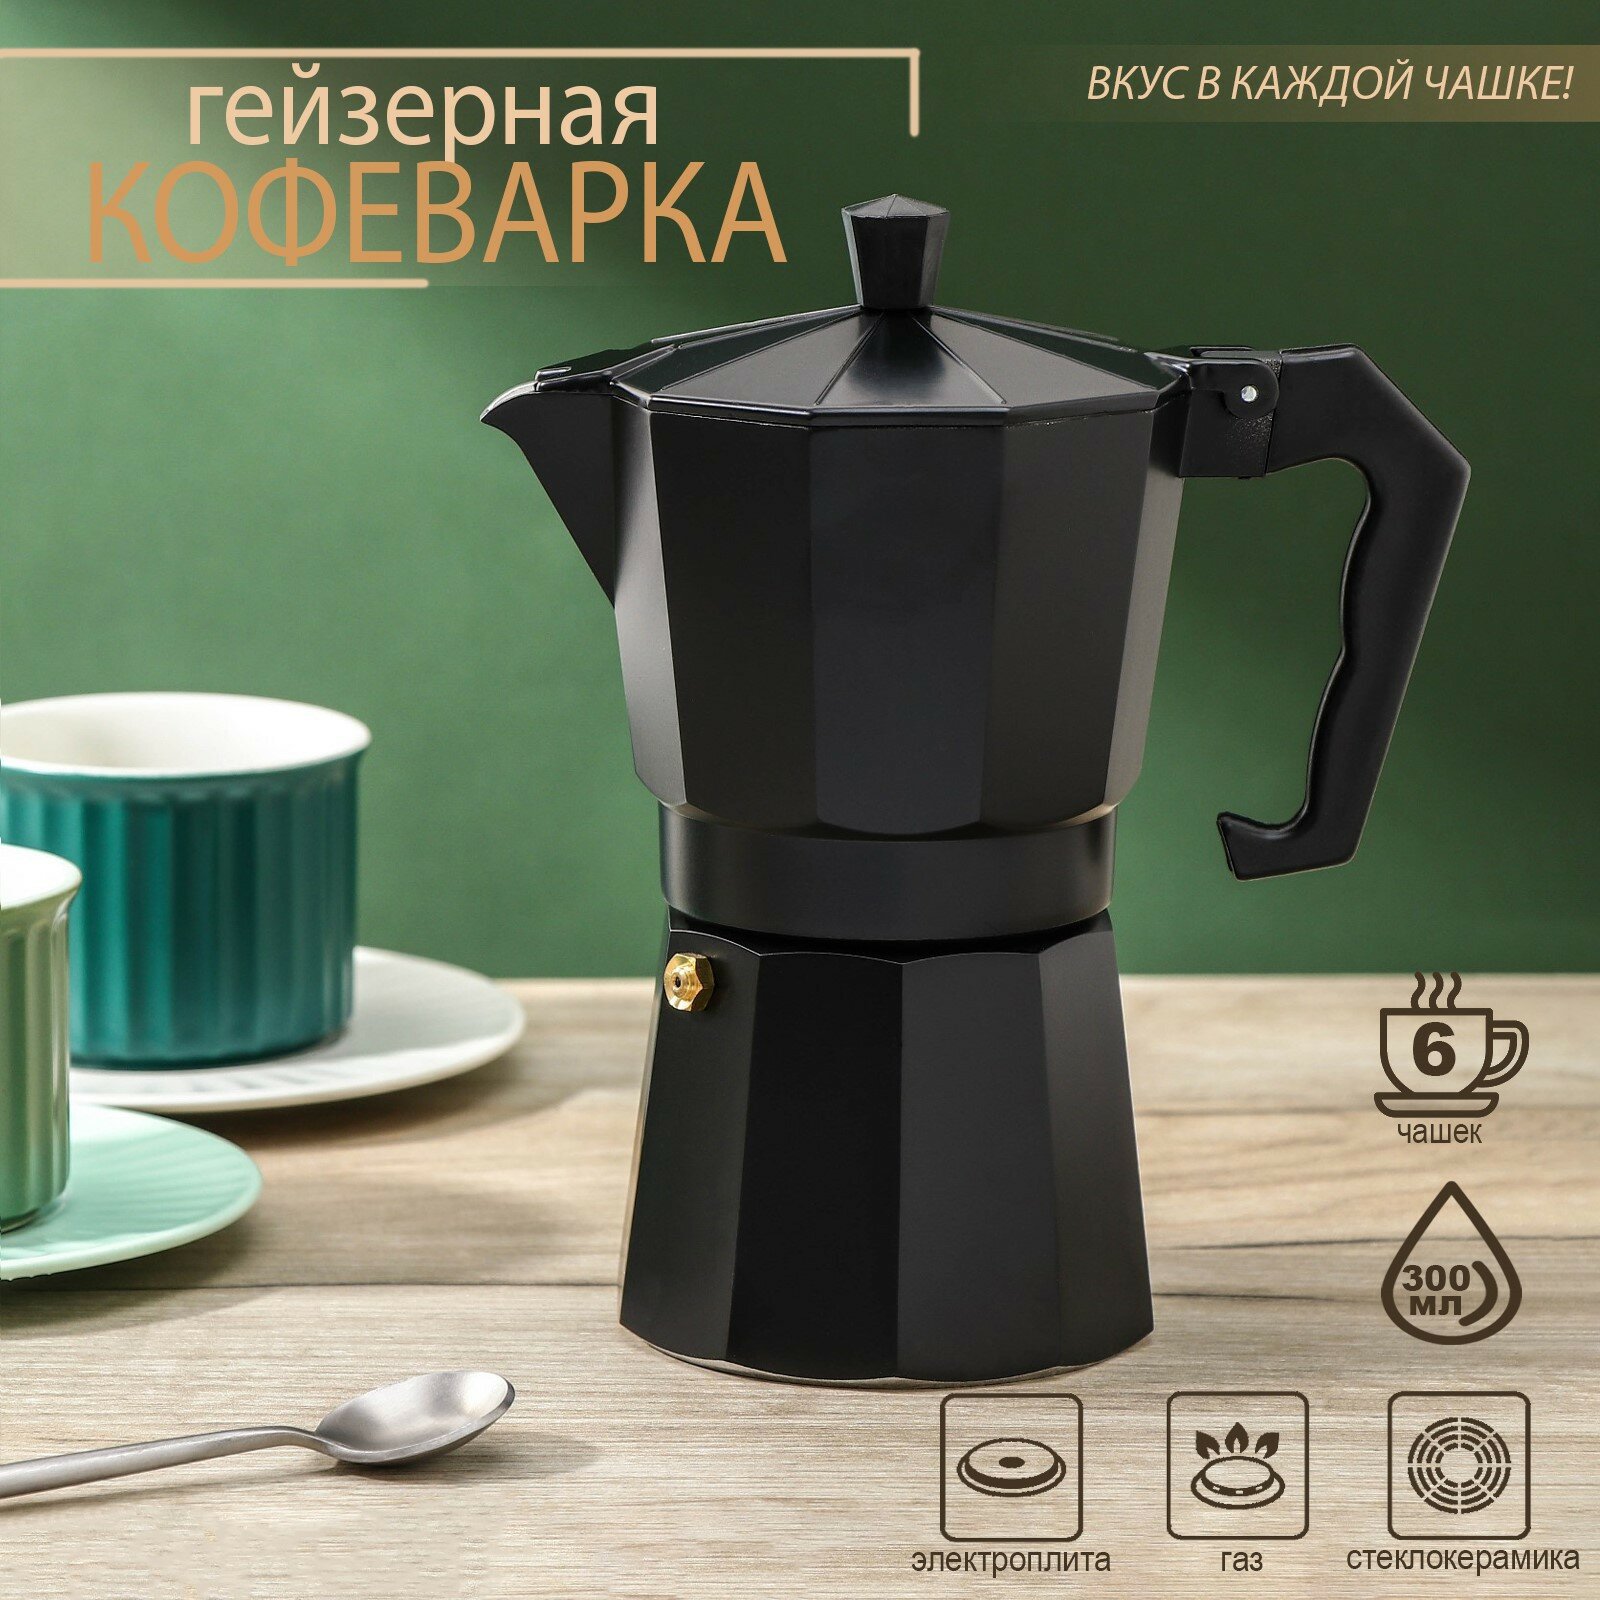 Кофеварка гейзерная Доляна Alum black на 6 чашек 300 мл